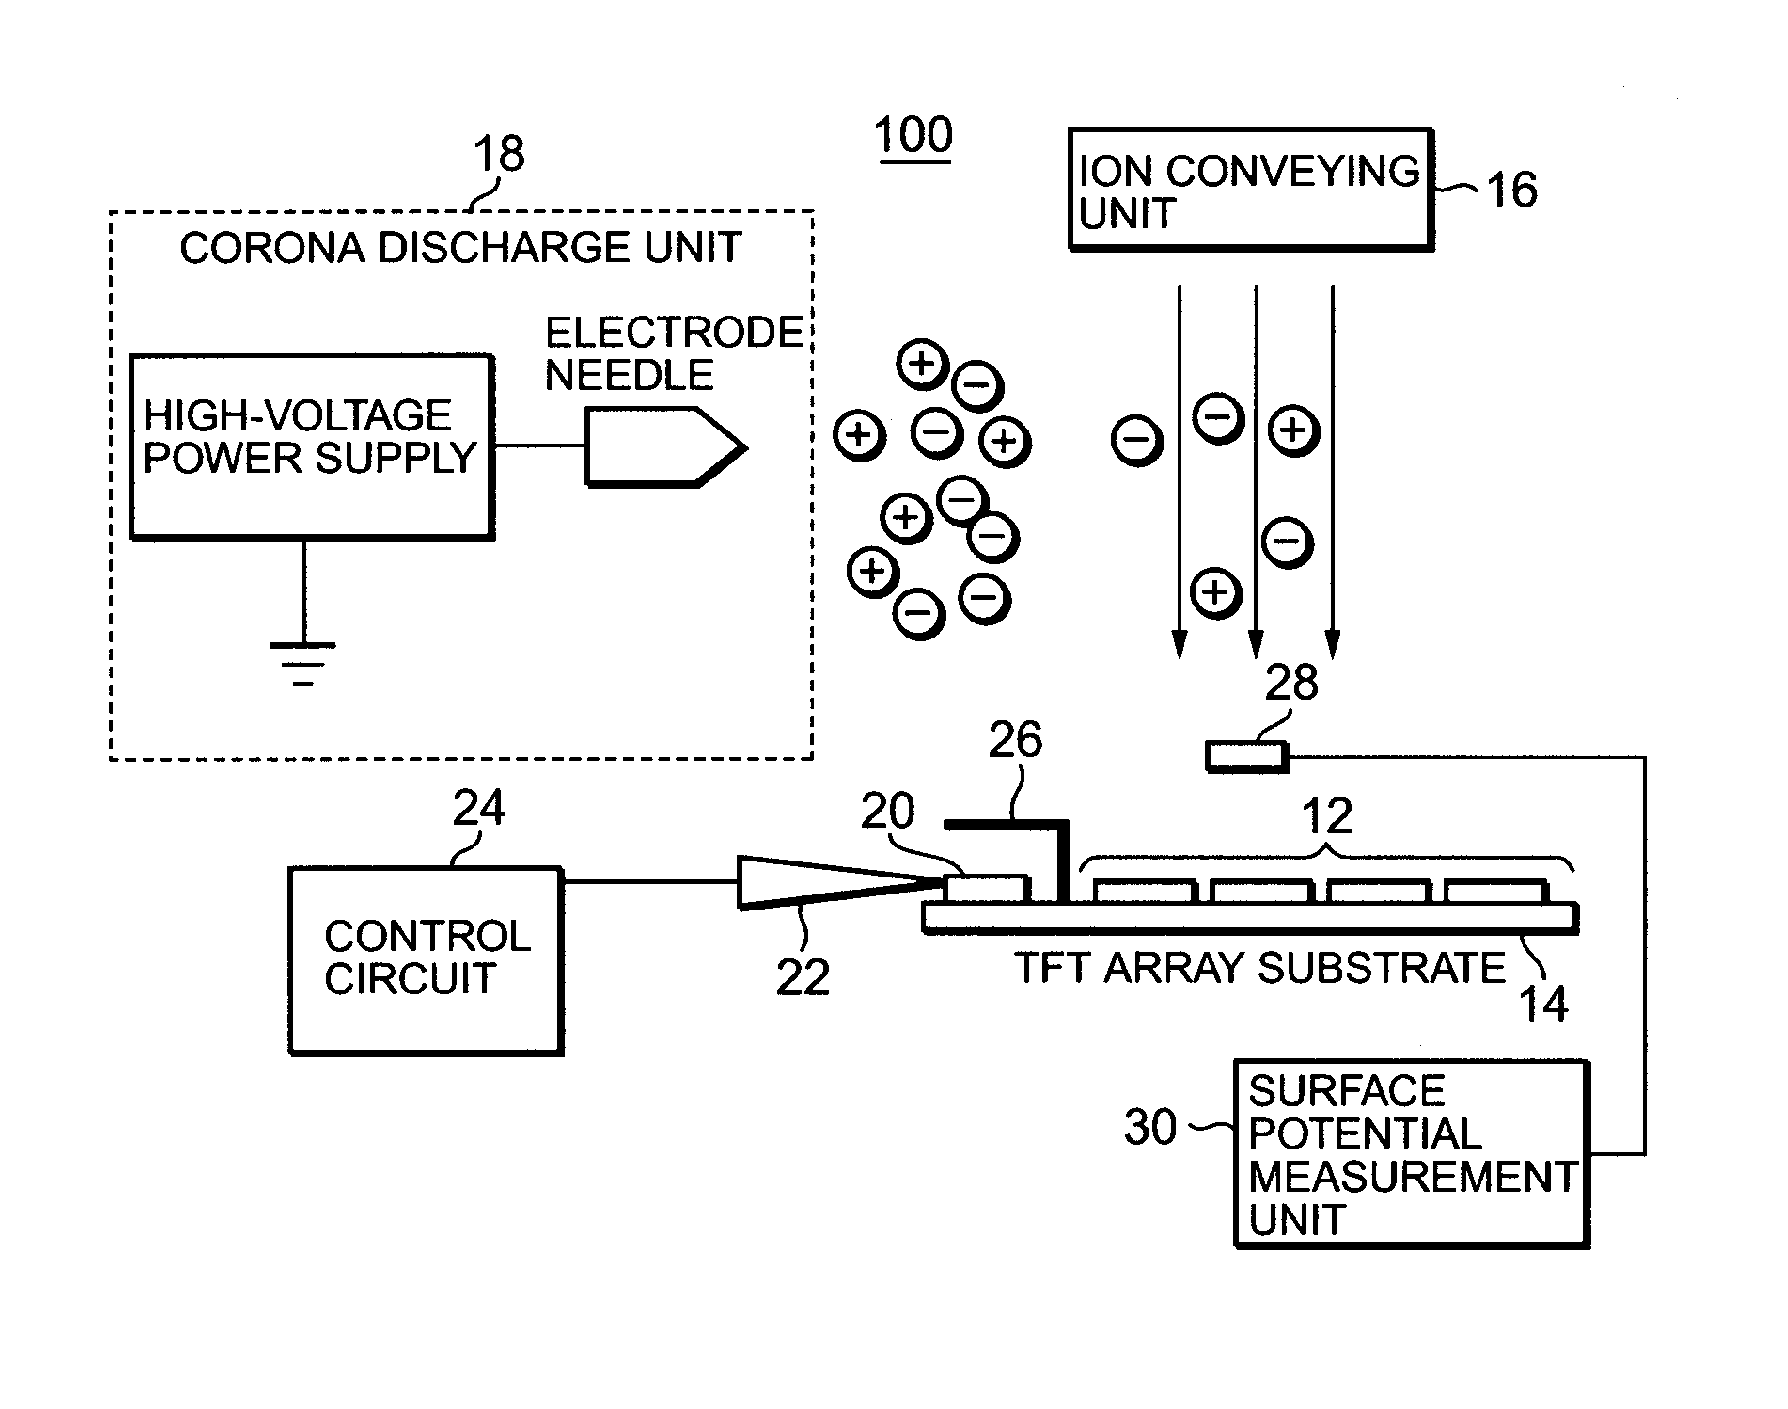 Thin film transistor tester and corresponding test method